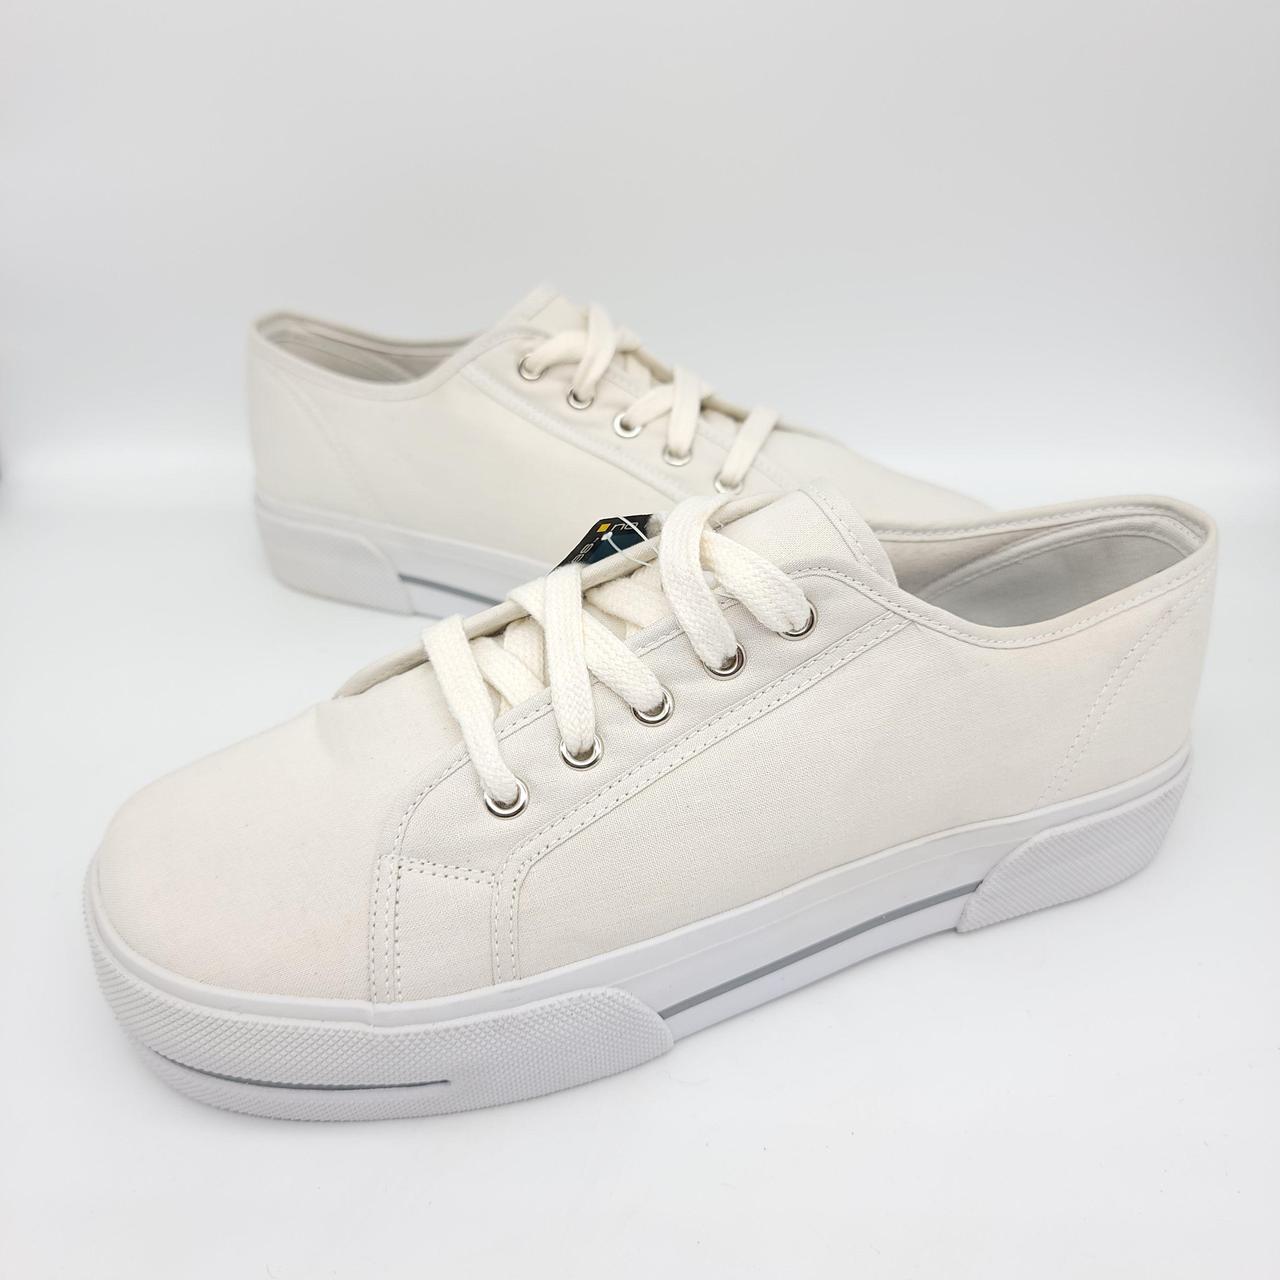 No Boundaries Platform Sneakers Shoes White Shoe... - Depop